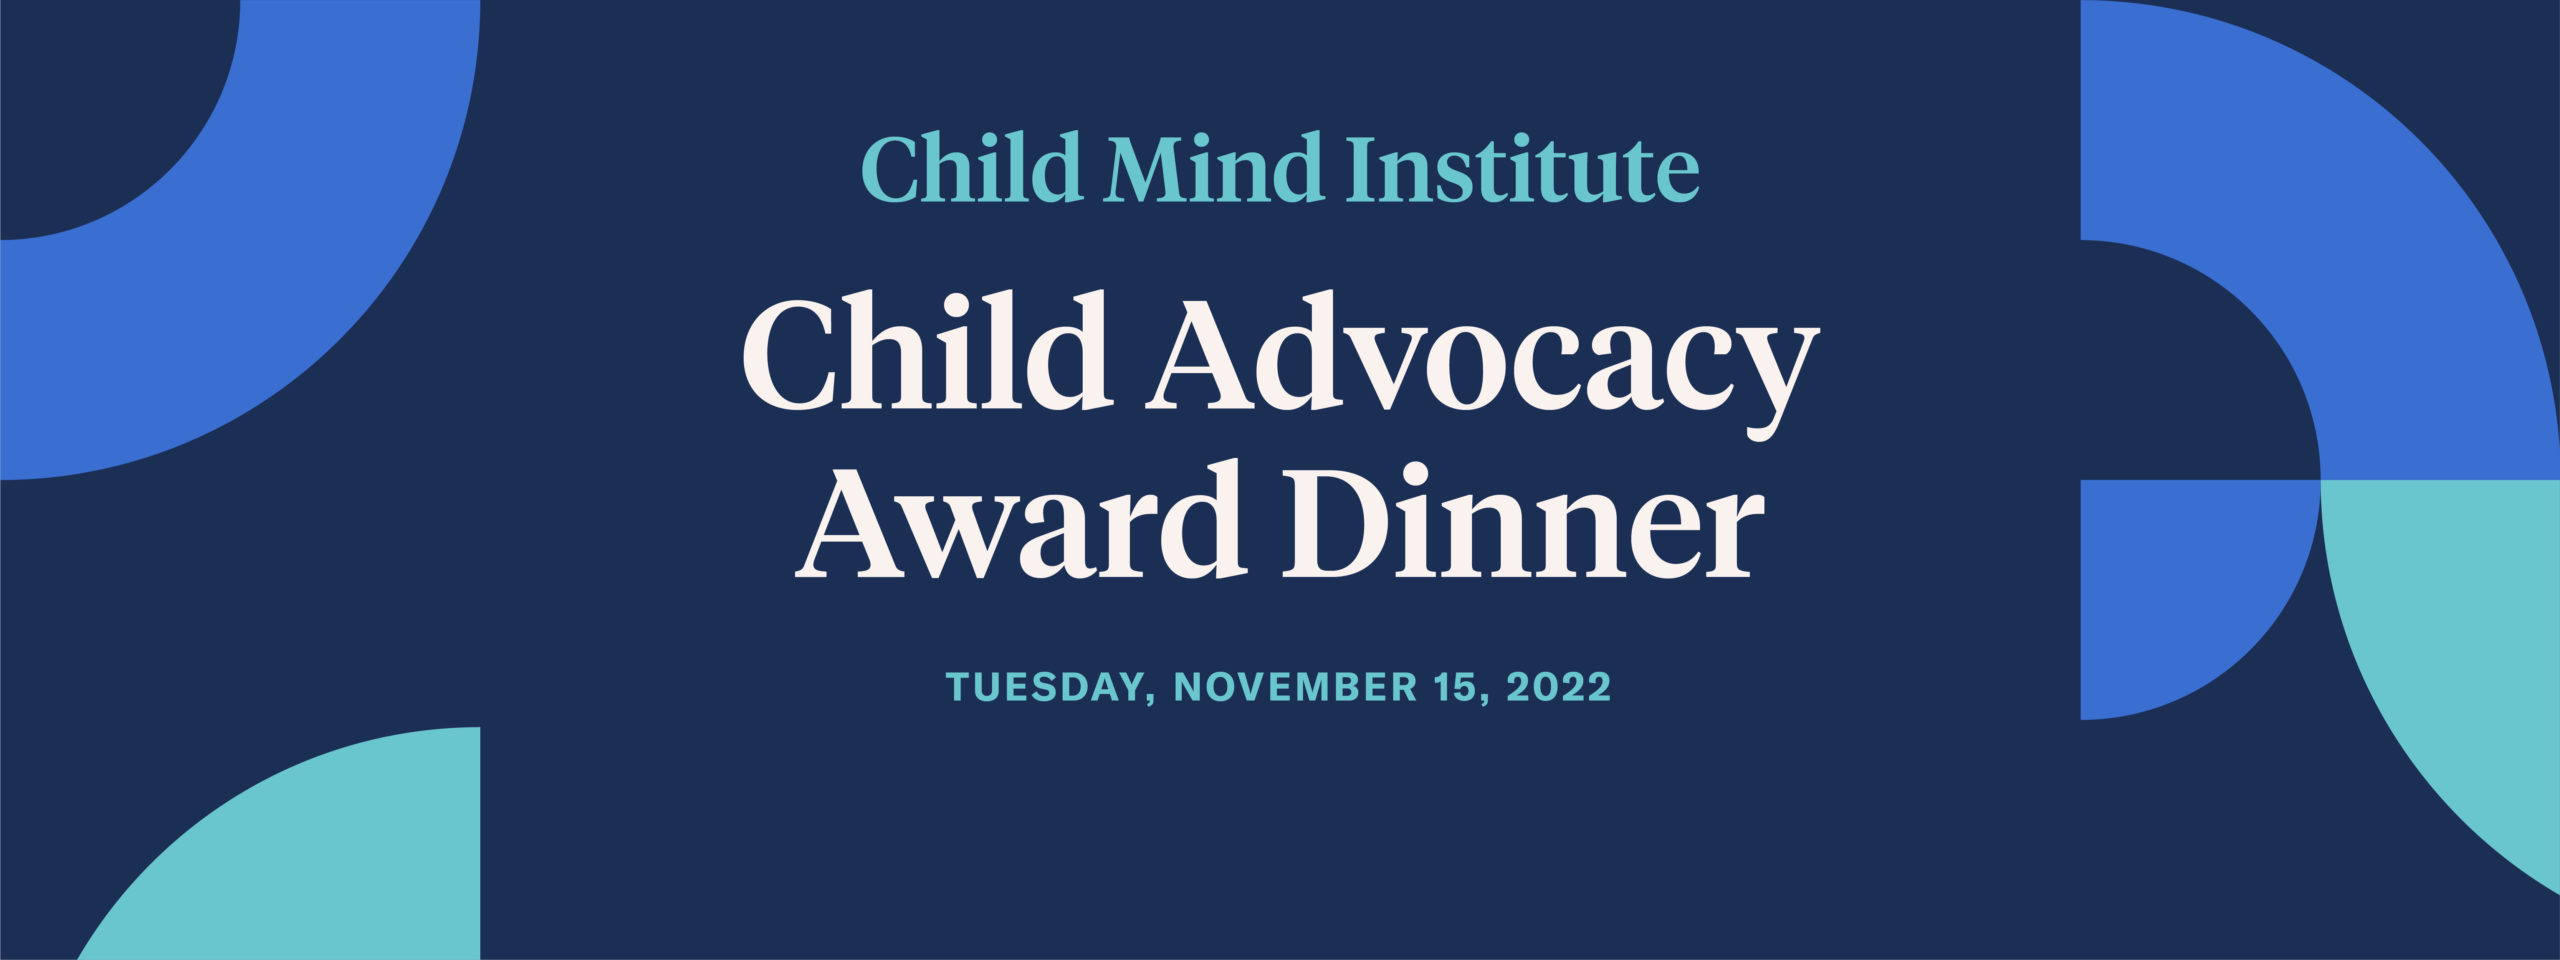 2022 Child Advocacy Award Dinner